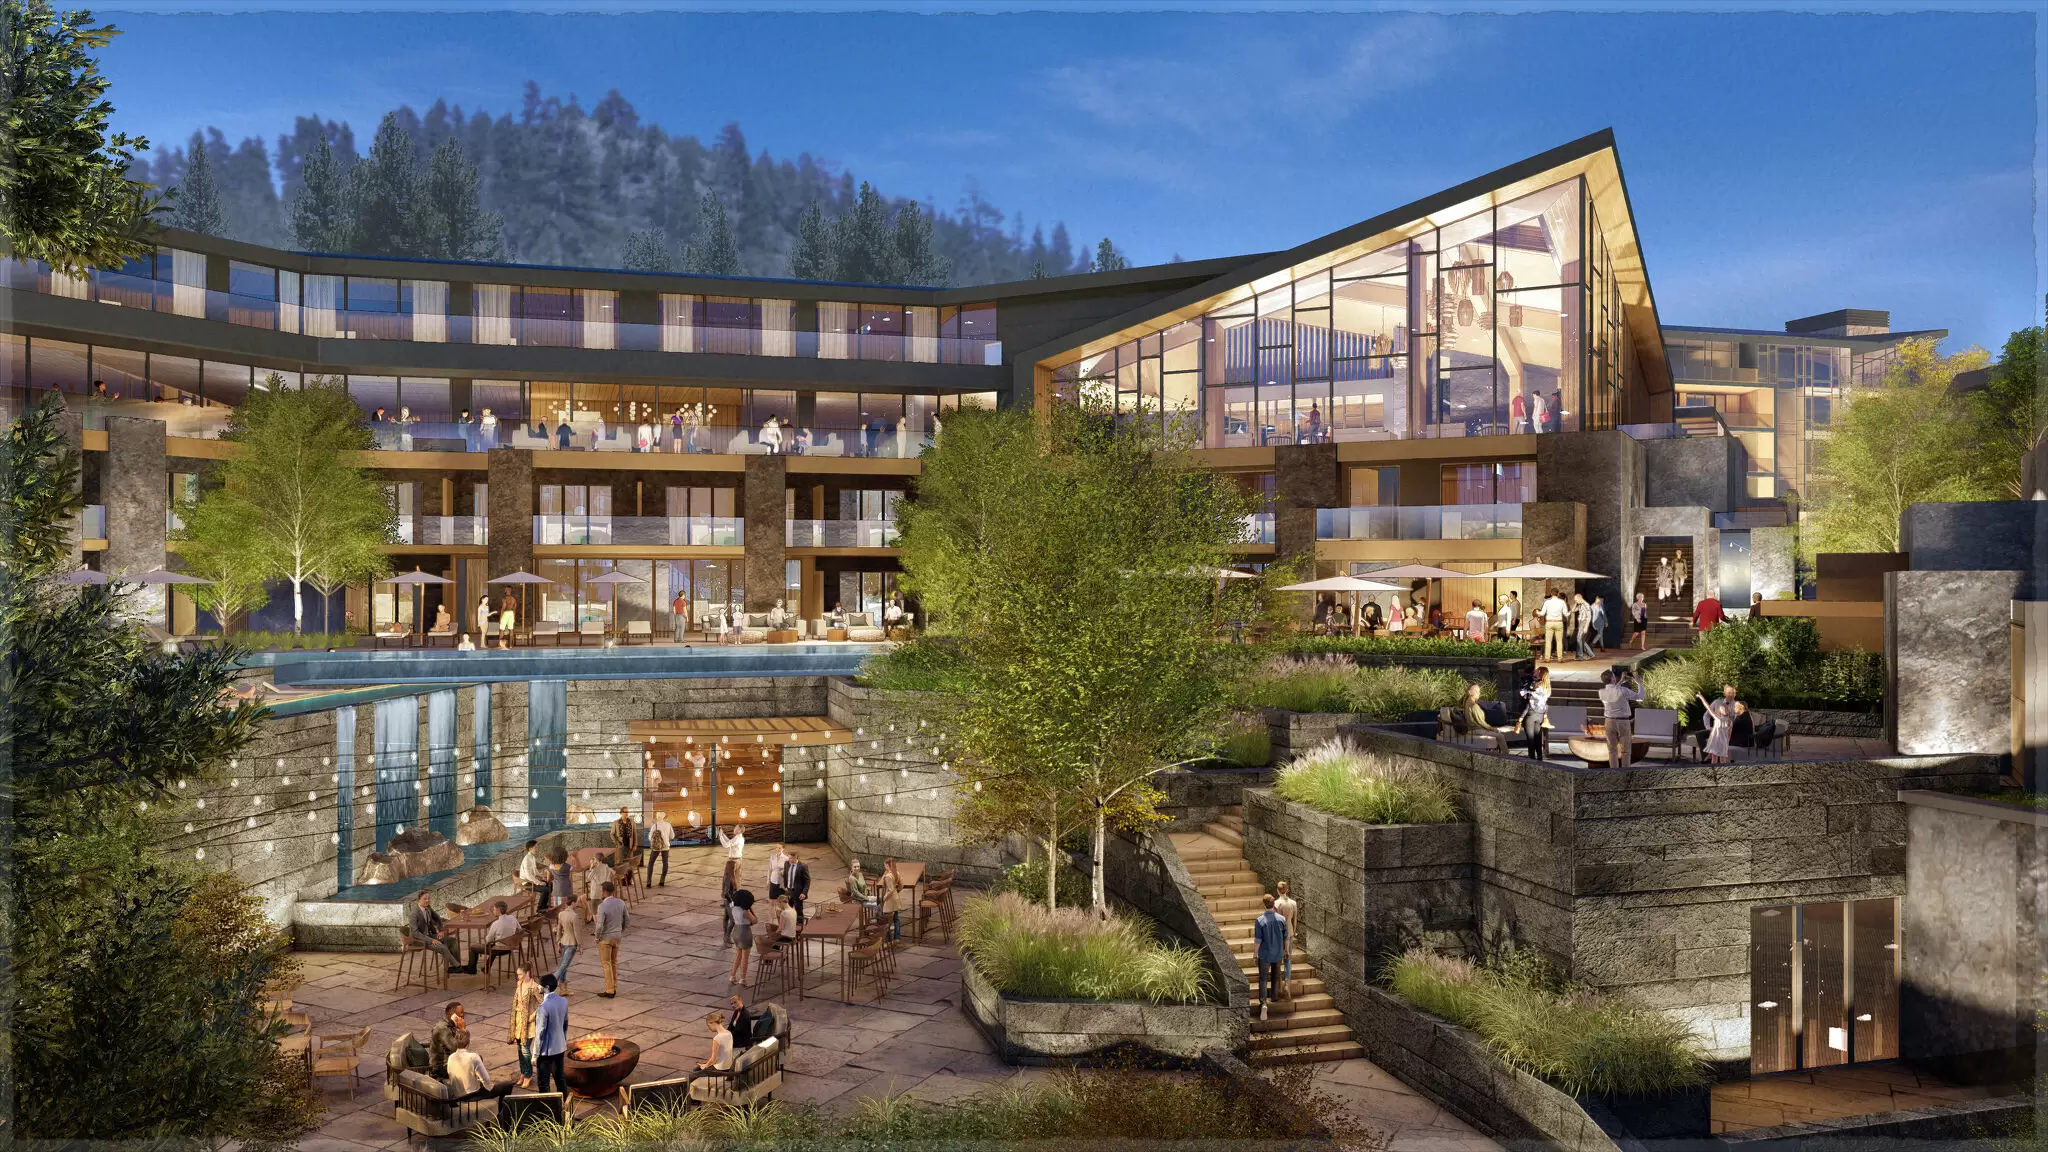 Waldorf Astoria Tahoe developer says luxury hotel project still on track in spite of delays